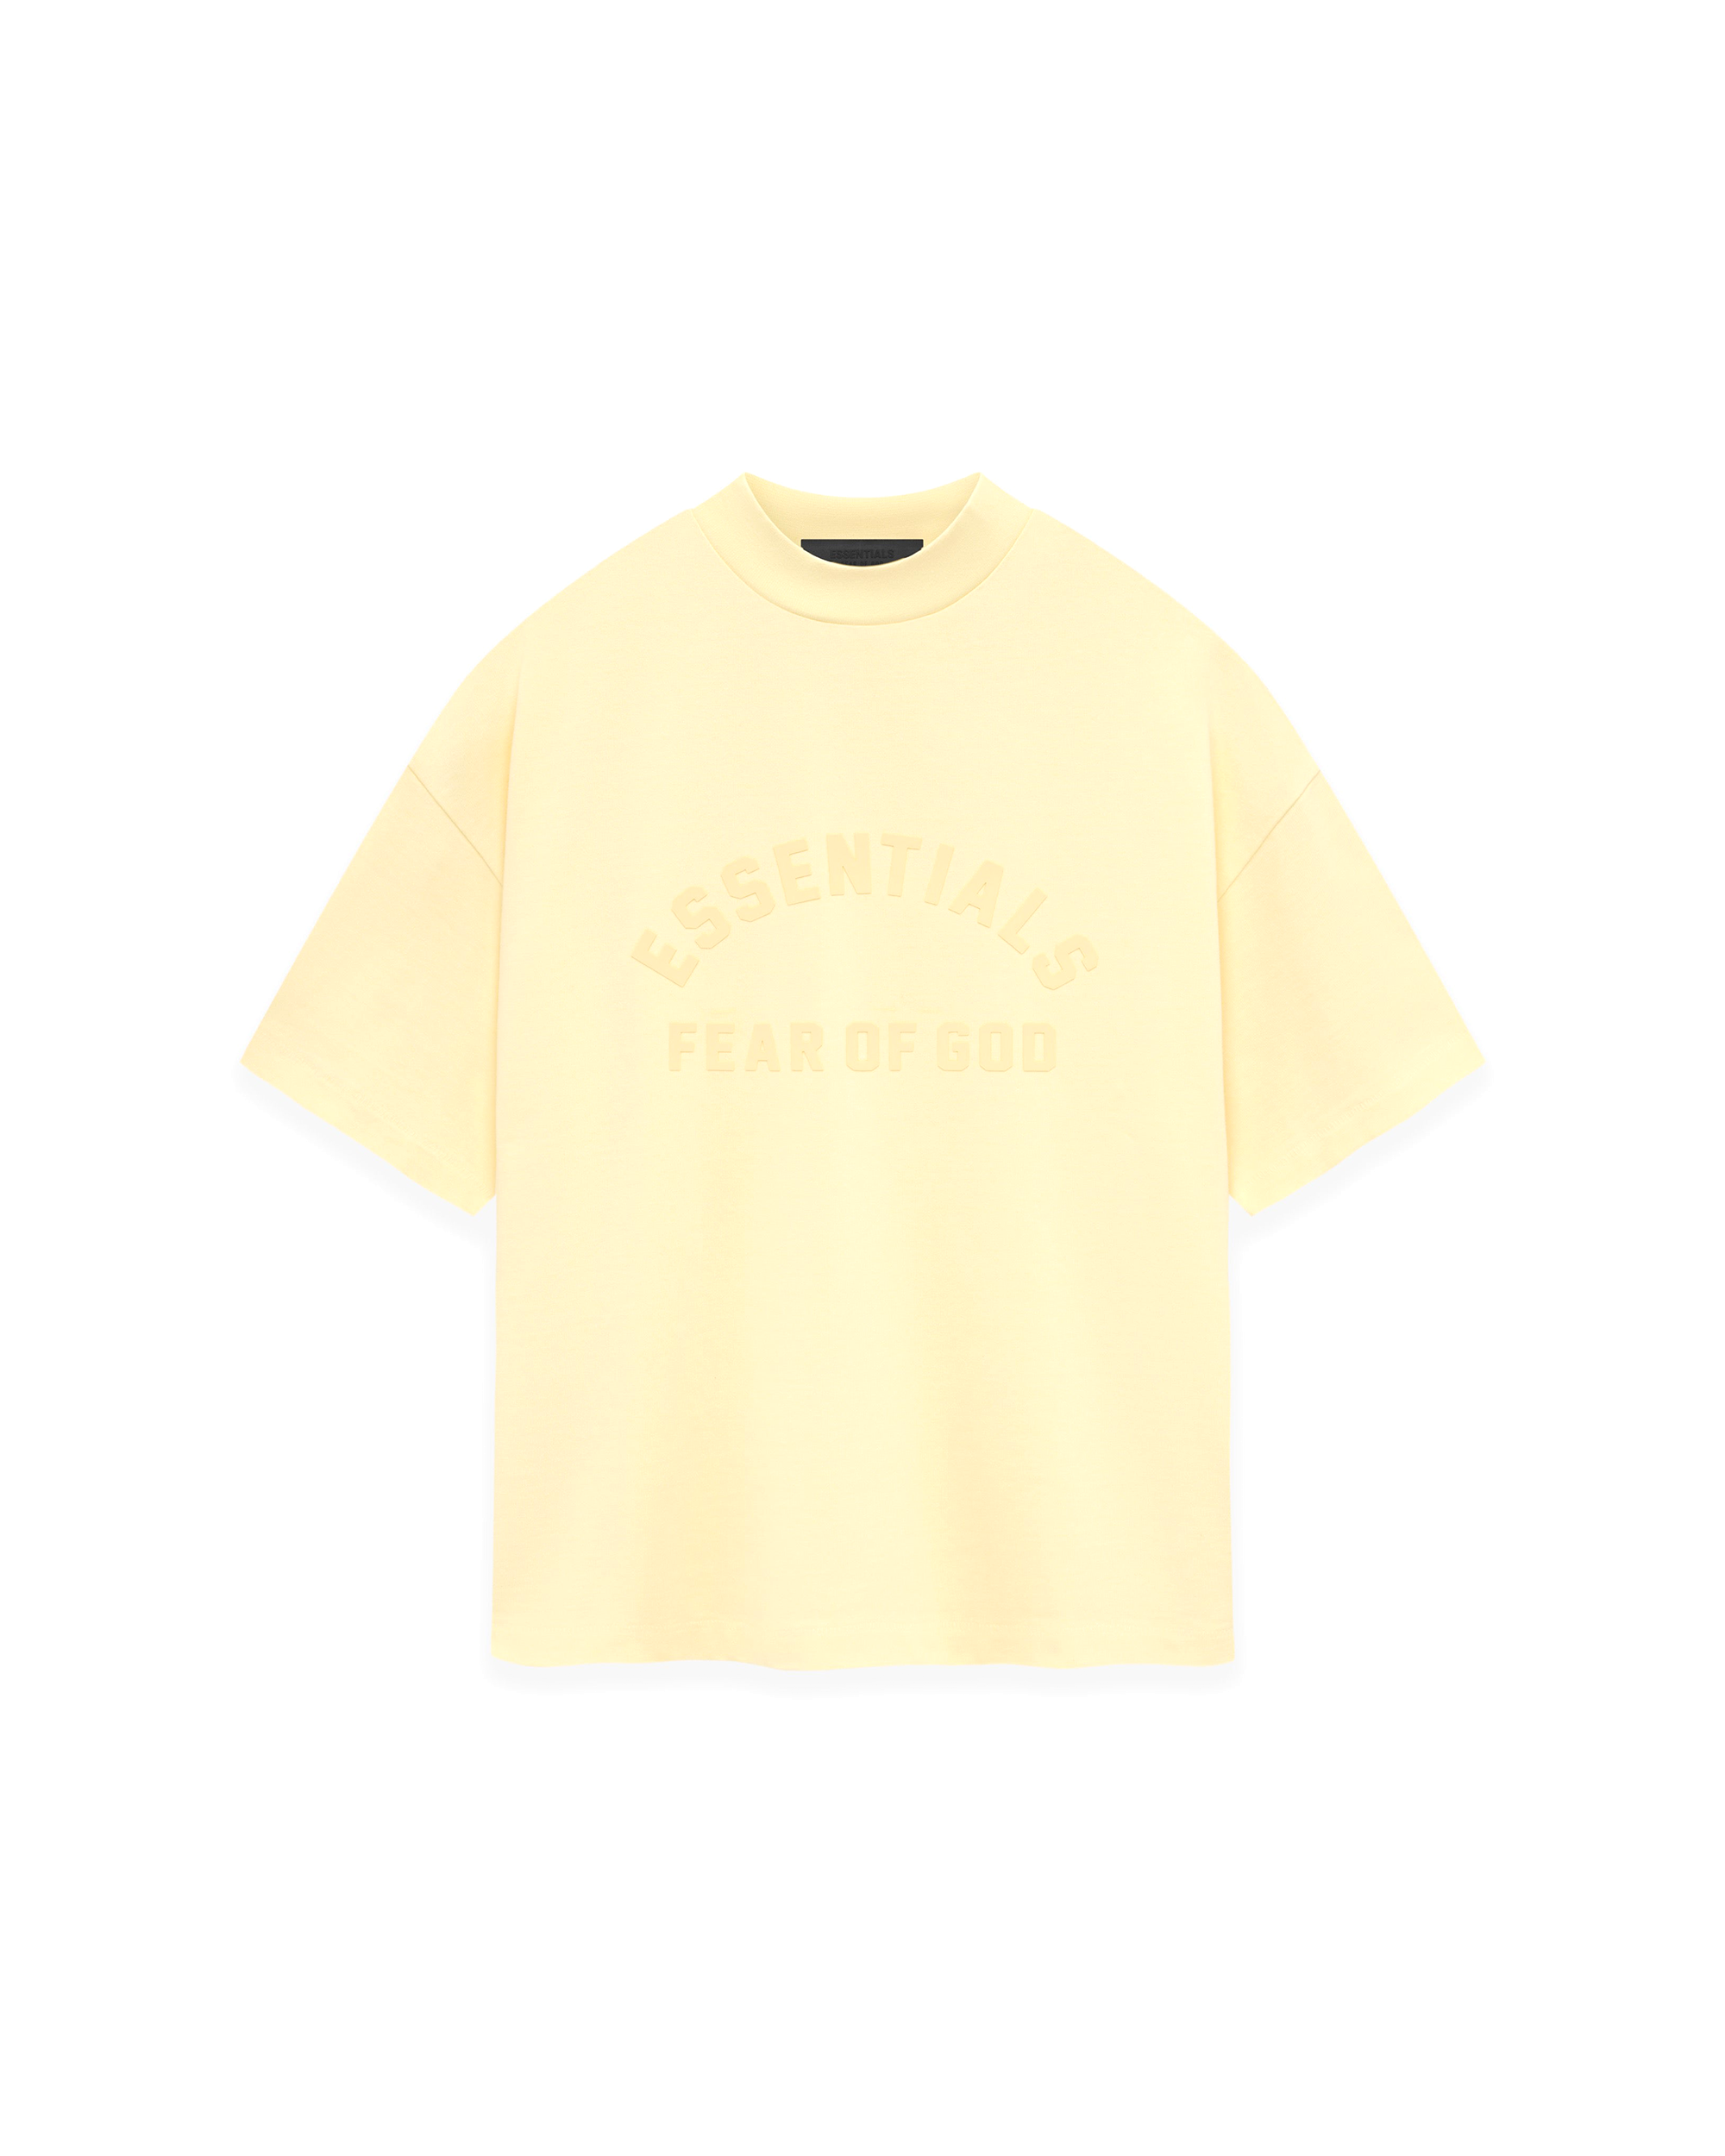 Heavy Weight T-Shirt - Garden Yellow